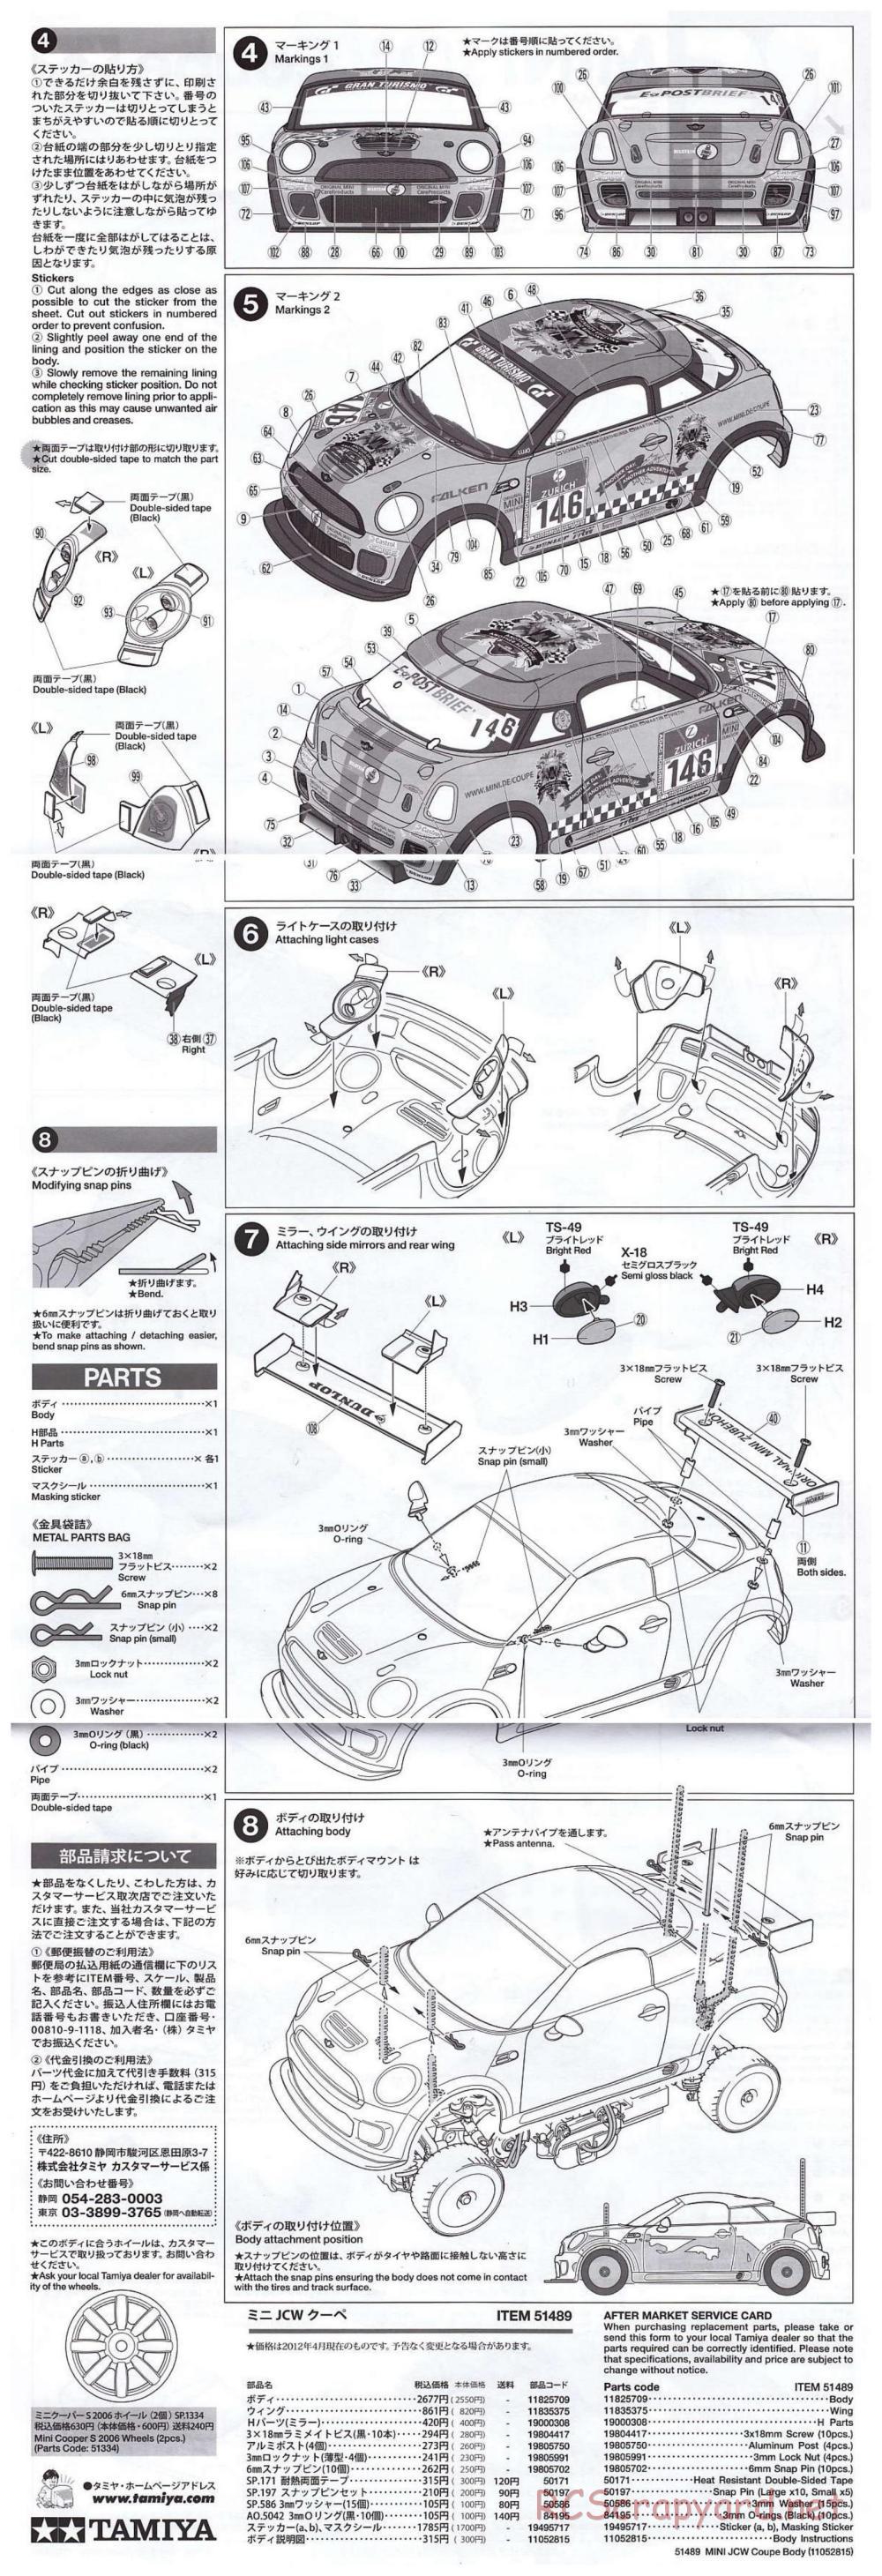 Tamiya - Mini JCW Coupe - M-05 Chassis - Body Manual - Page 2